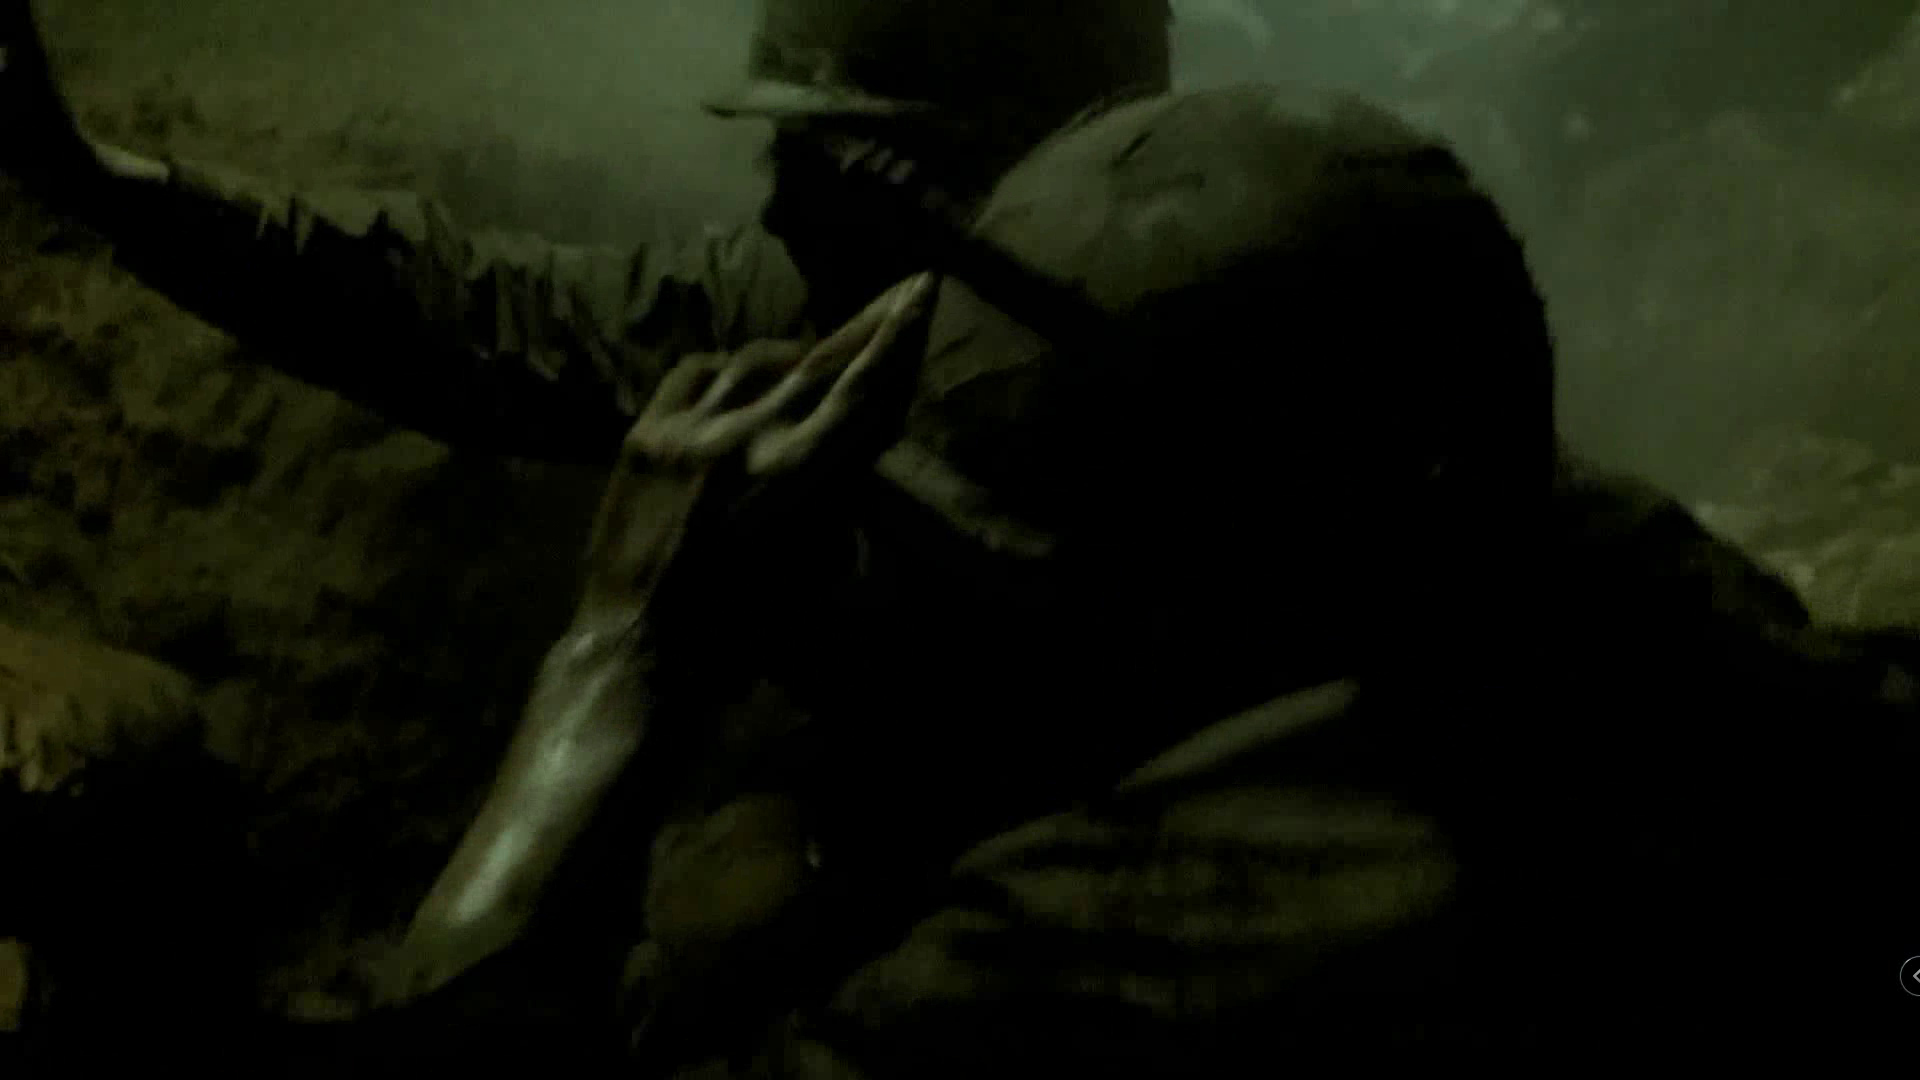 Ultimate Warfare S01E05 Khe Sanh Marines Under Siege 1080p AVI MP3 Web DL 1 94GB